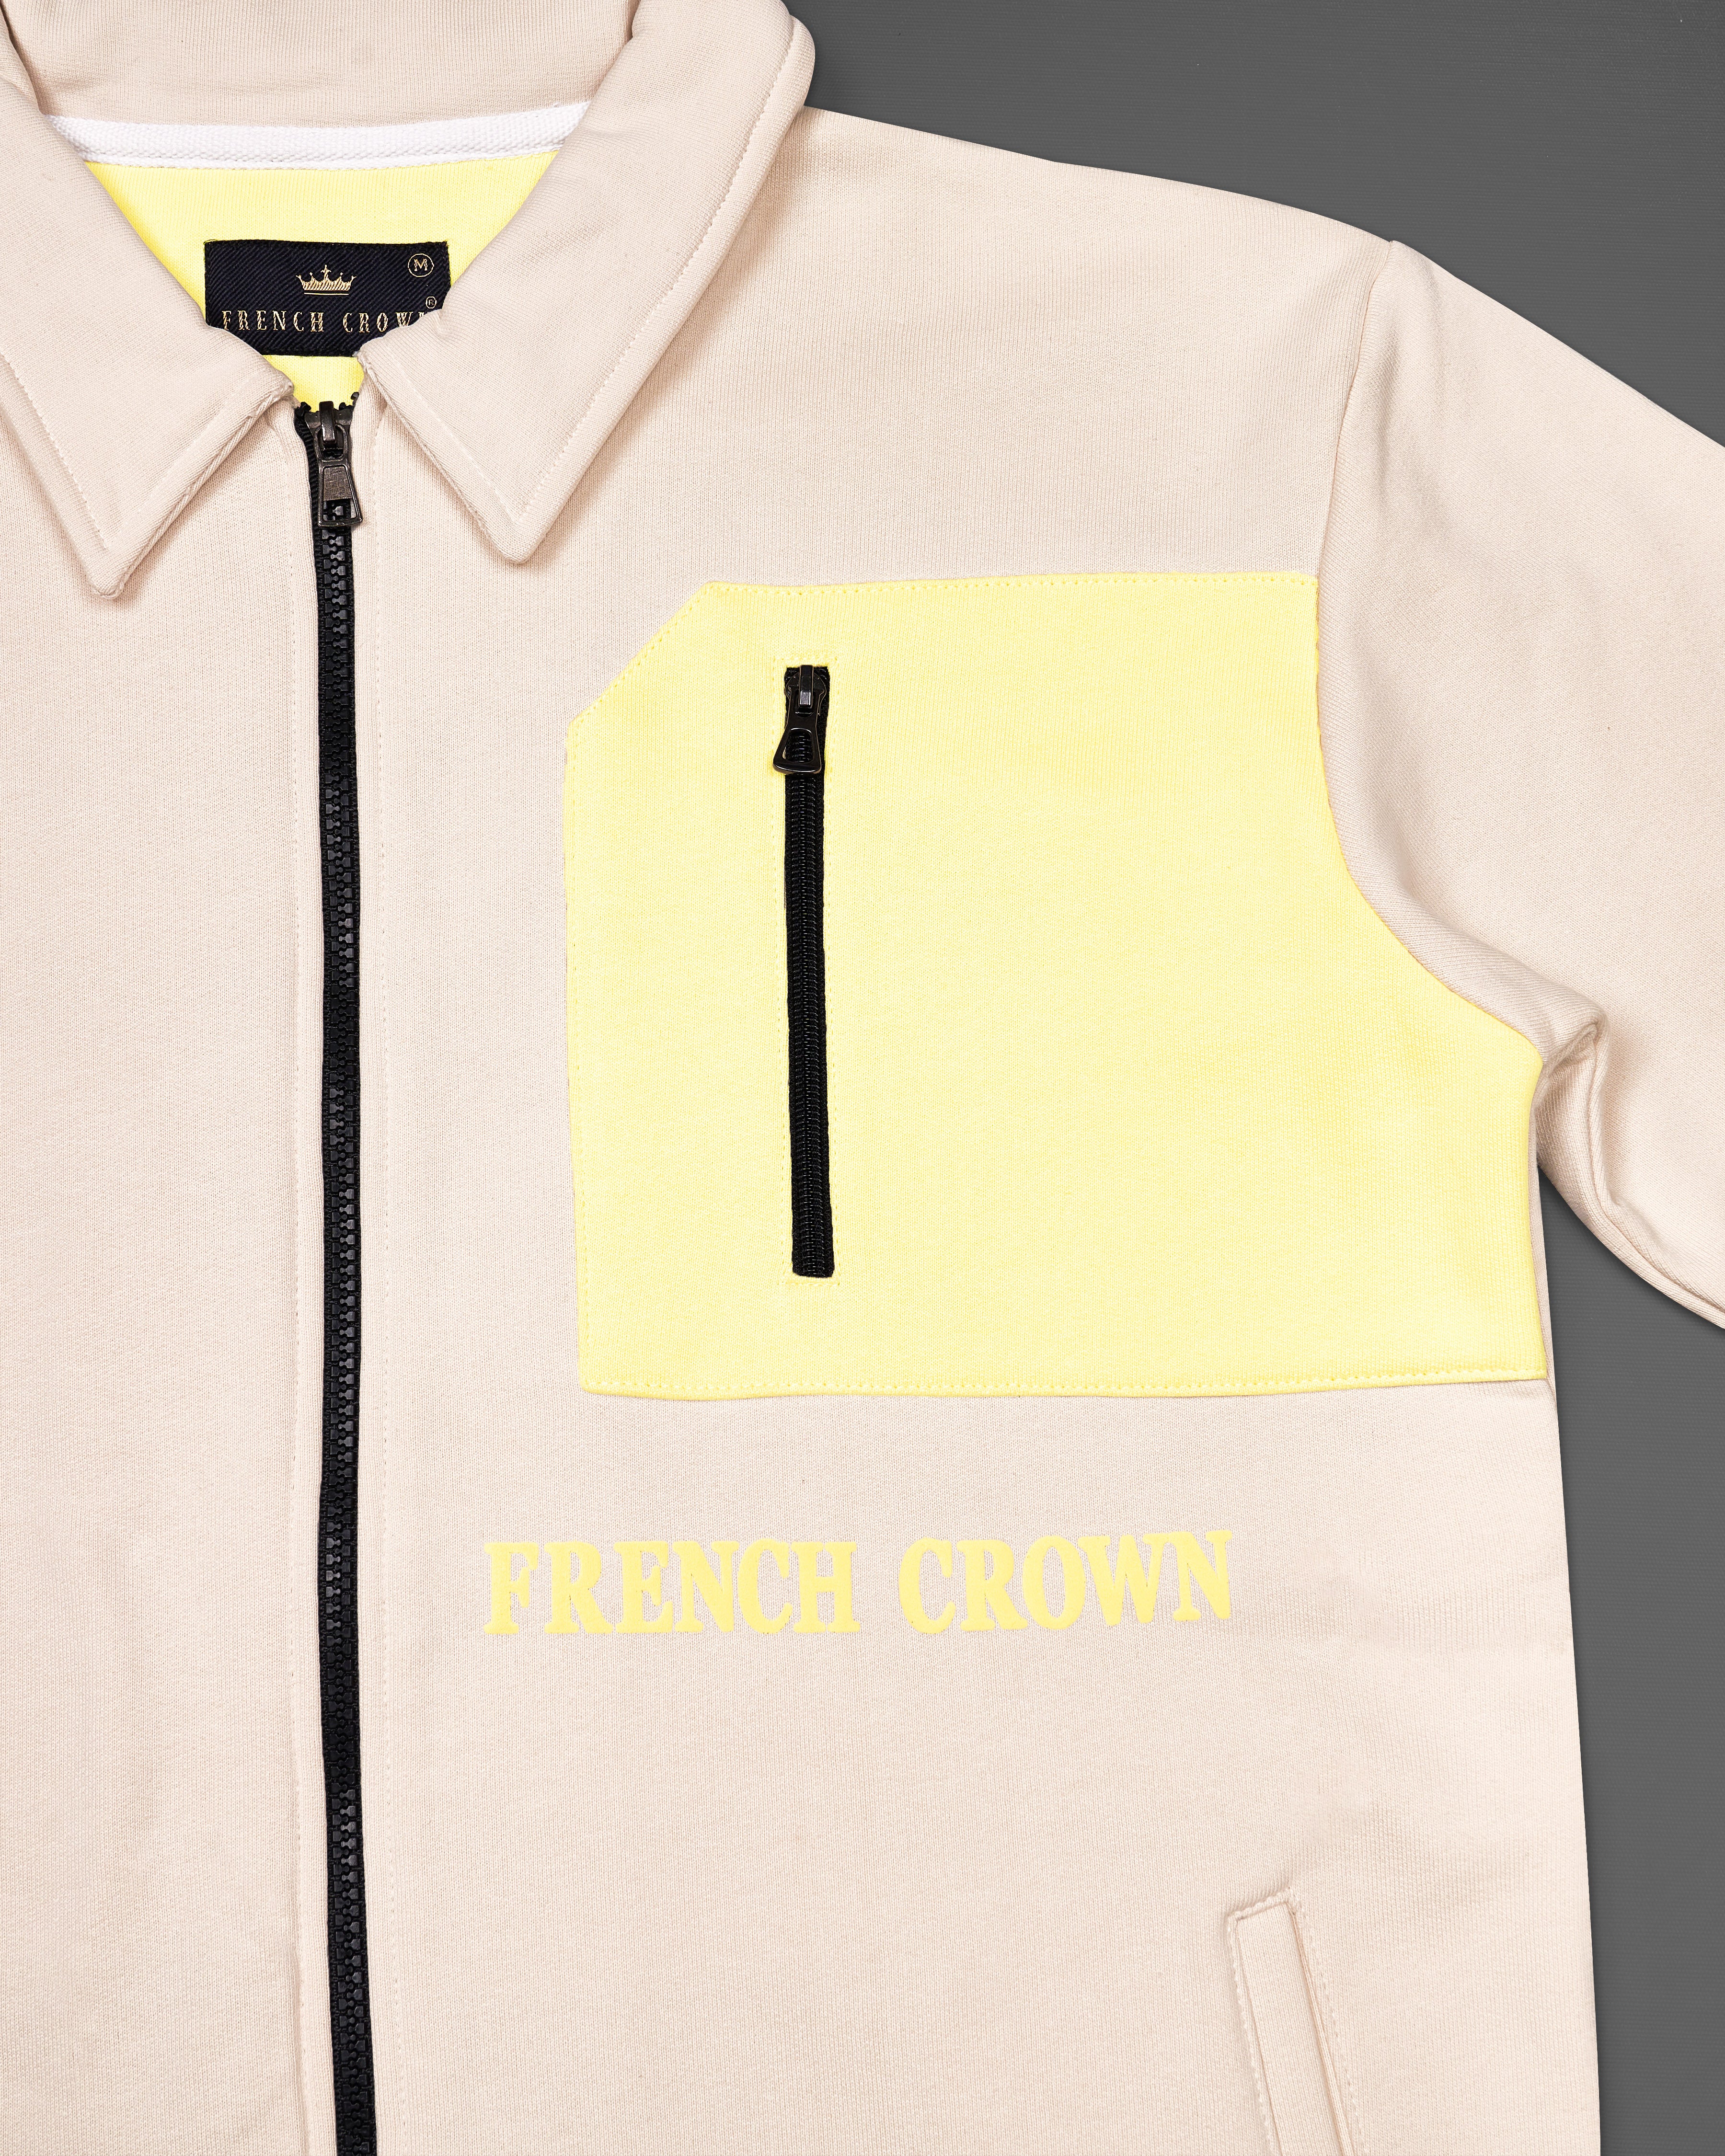 Bizarre Cream with Colonial Yellow Pique Polo Heavy weight Sweatshirt with Zipper Closure TS701-S, TS701-M, TS701-L, TS701-XL, TS701-XXL